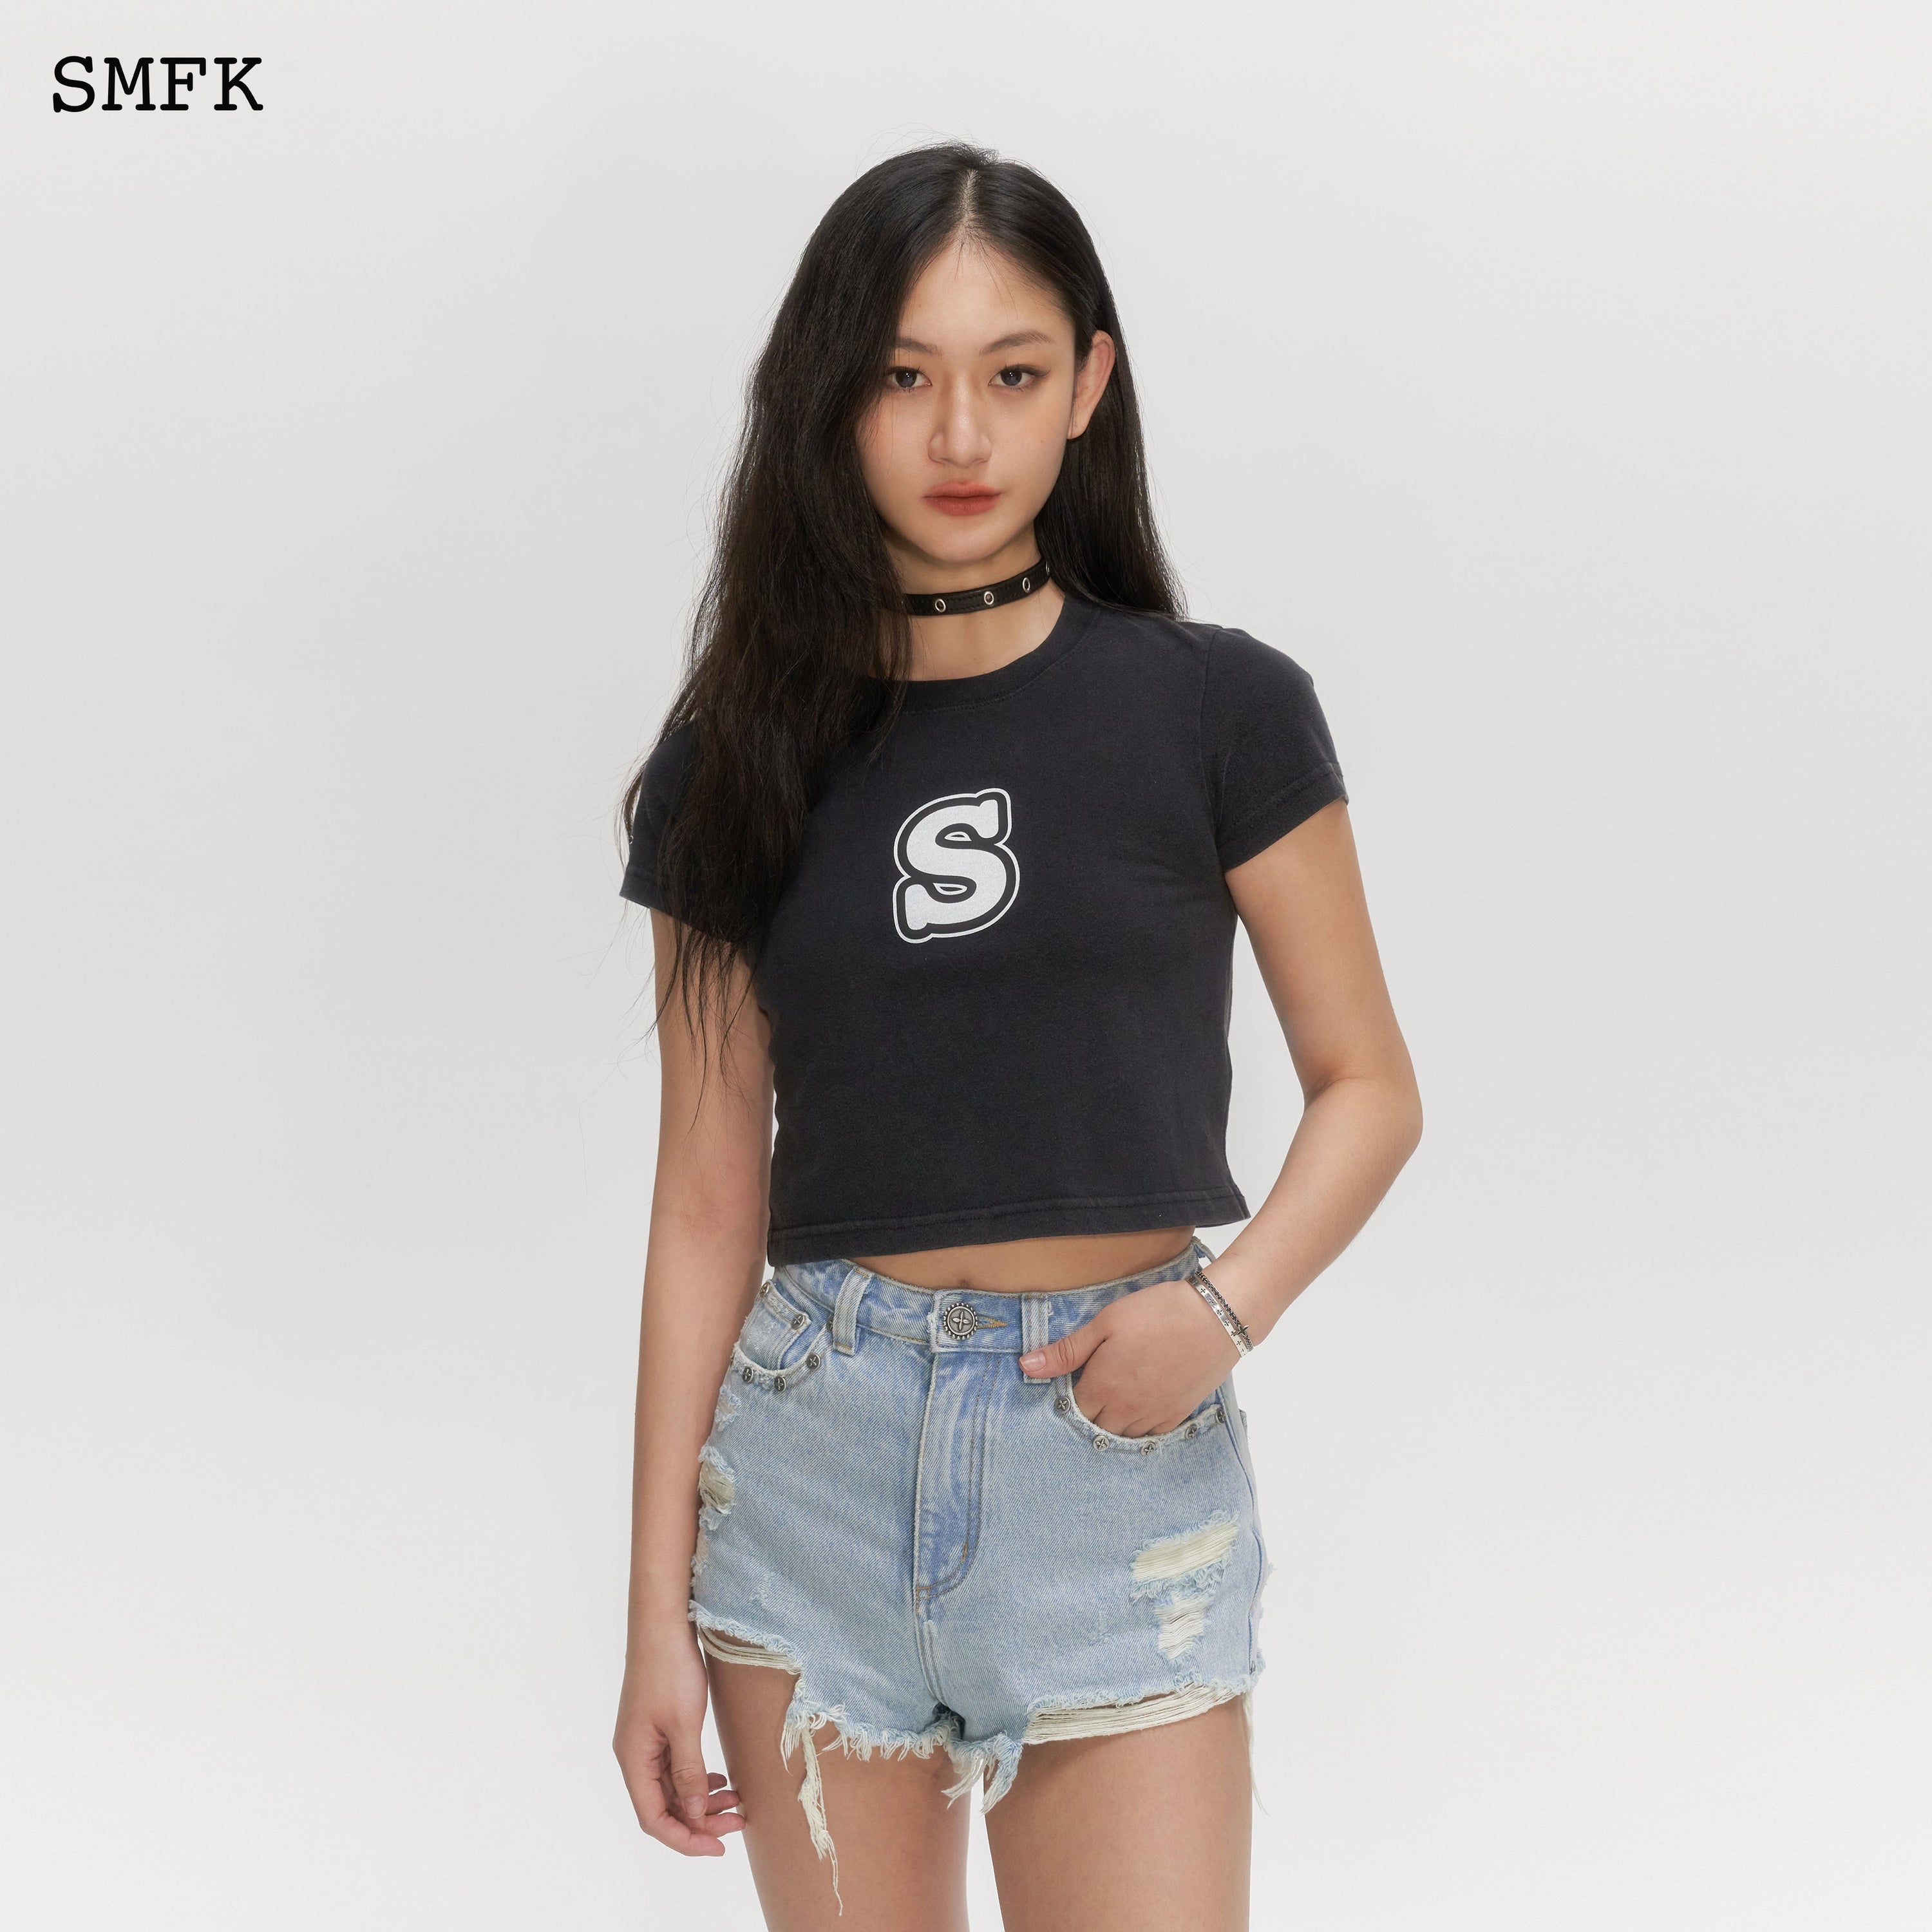 Skinny Model Black Tight T-shirt - SMFK Official